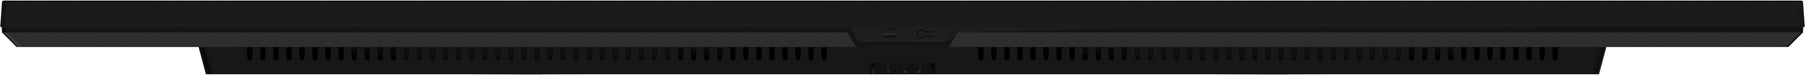 iiyama ProLite LH5060UHS-B1AG 50" 4K Ultra HD Professional Digital Signage Display